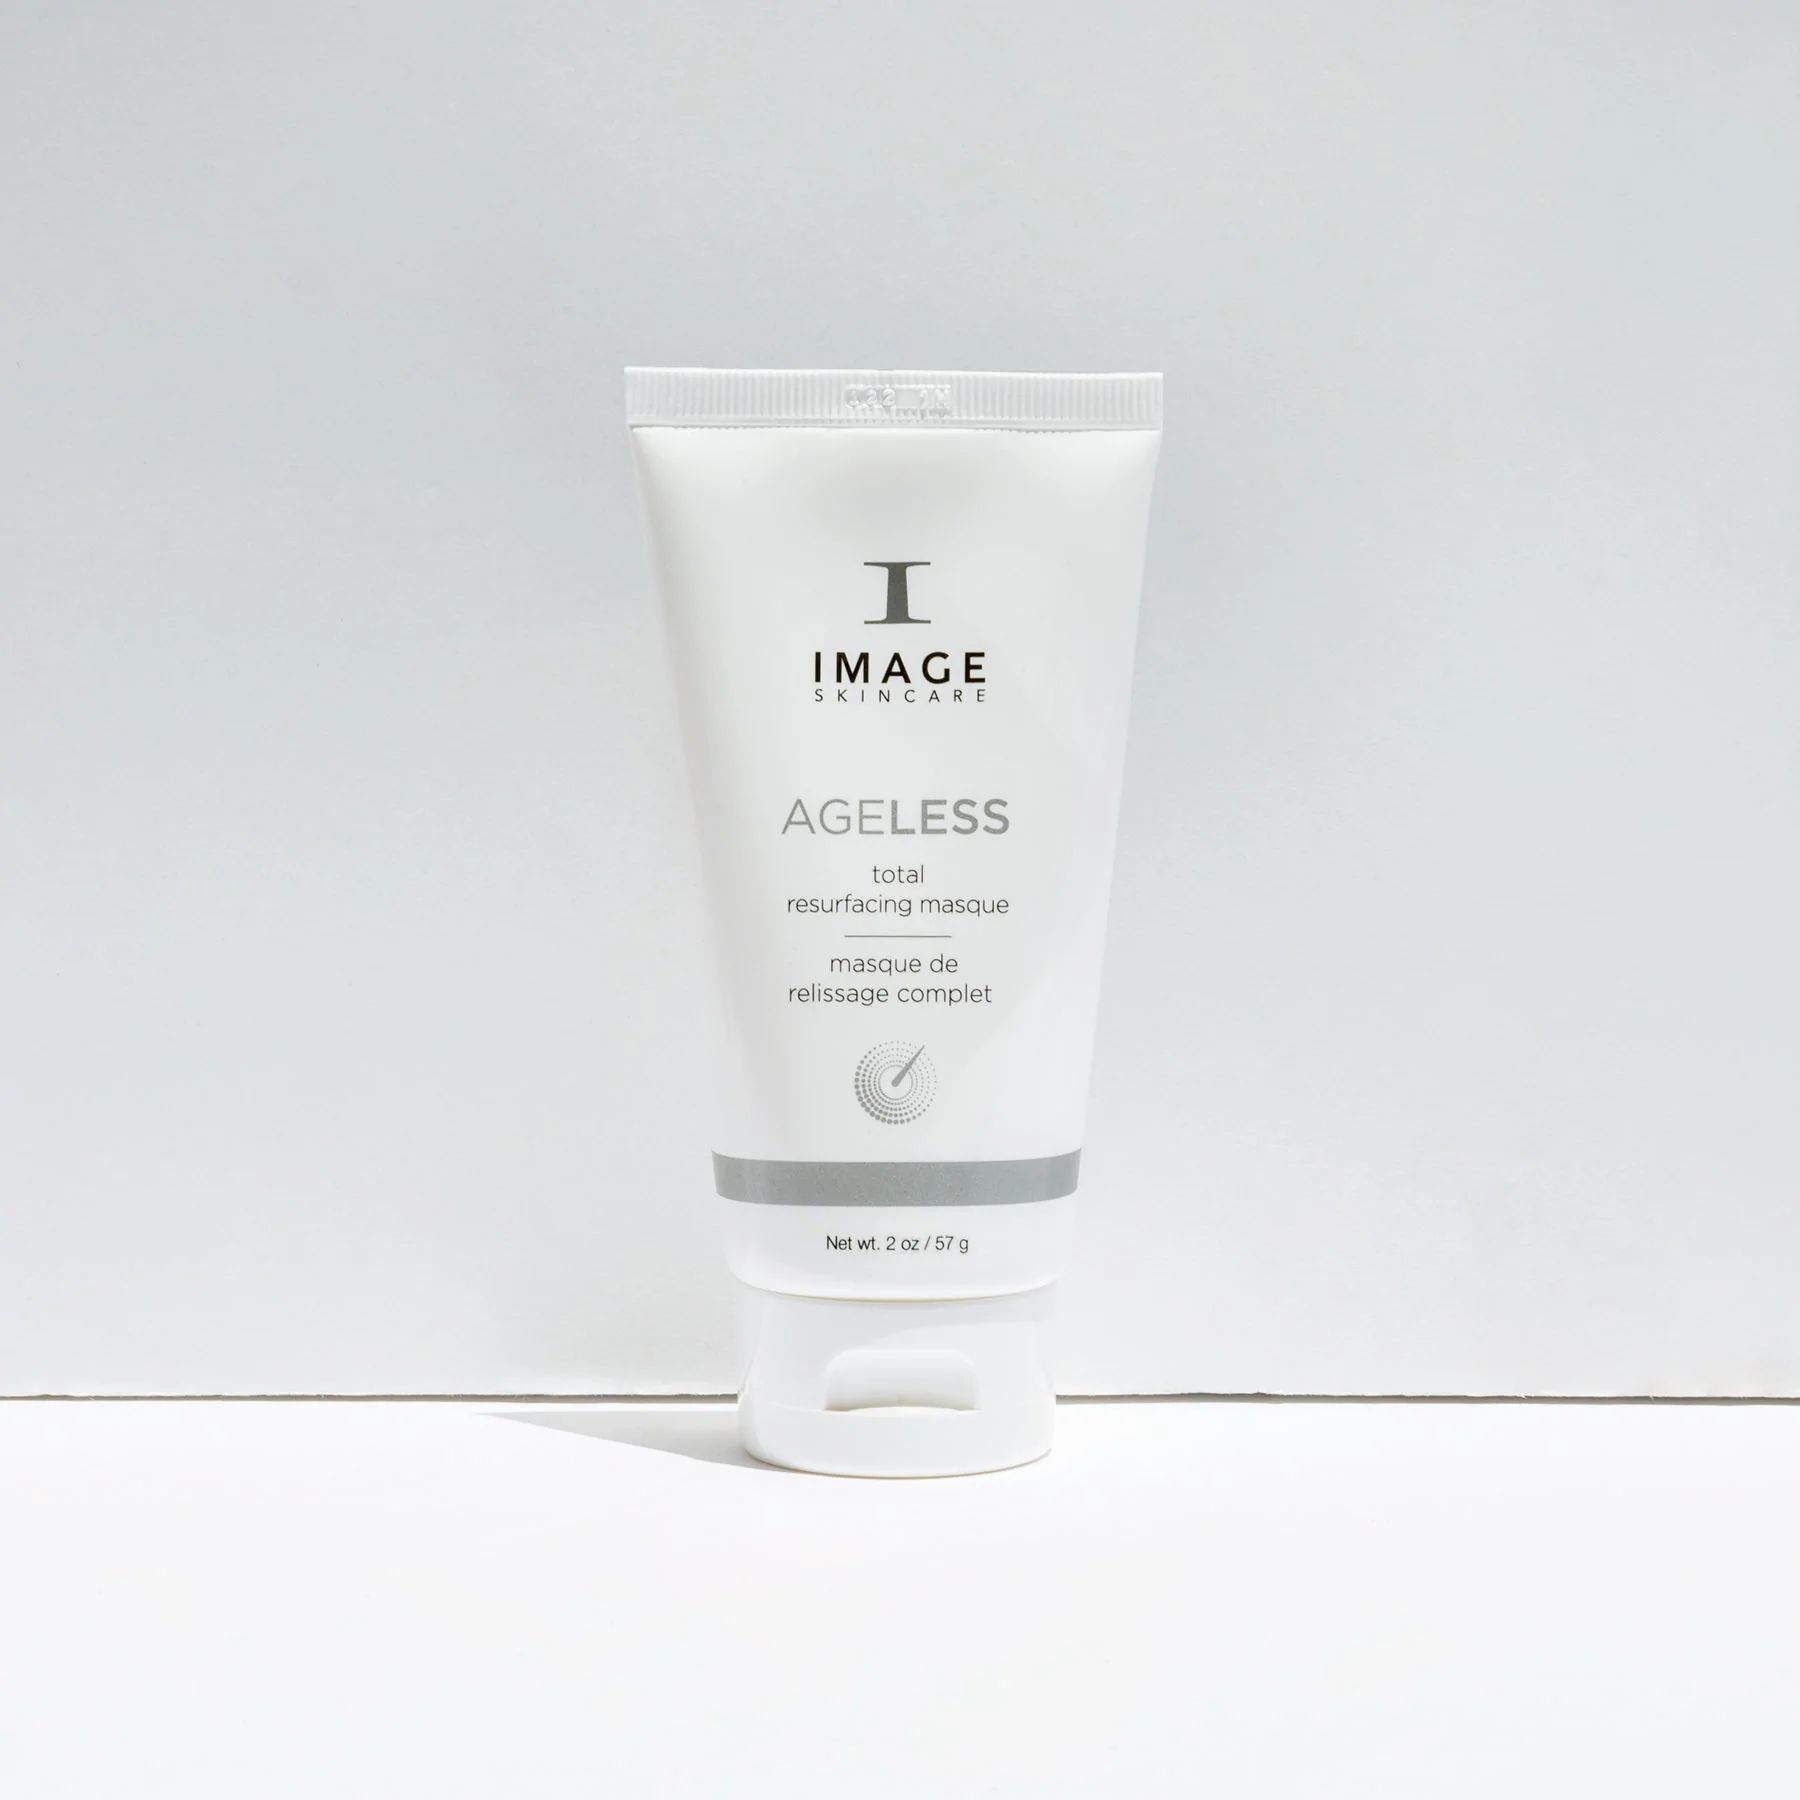 AGELESS total resurfacing masque | Image Skincare